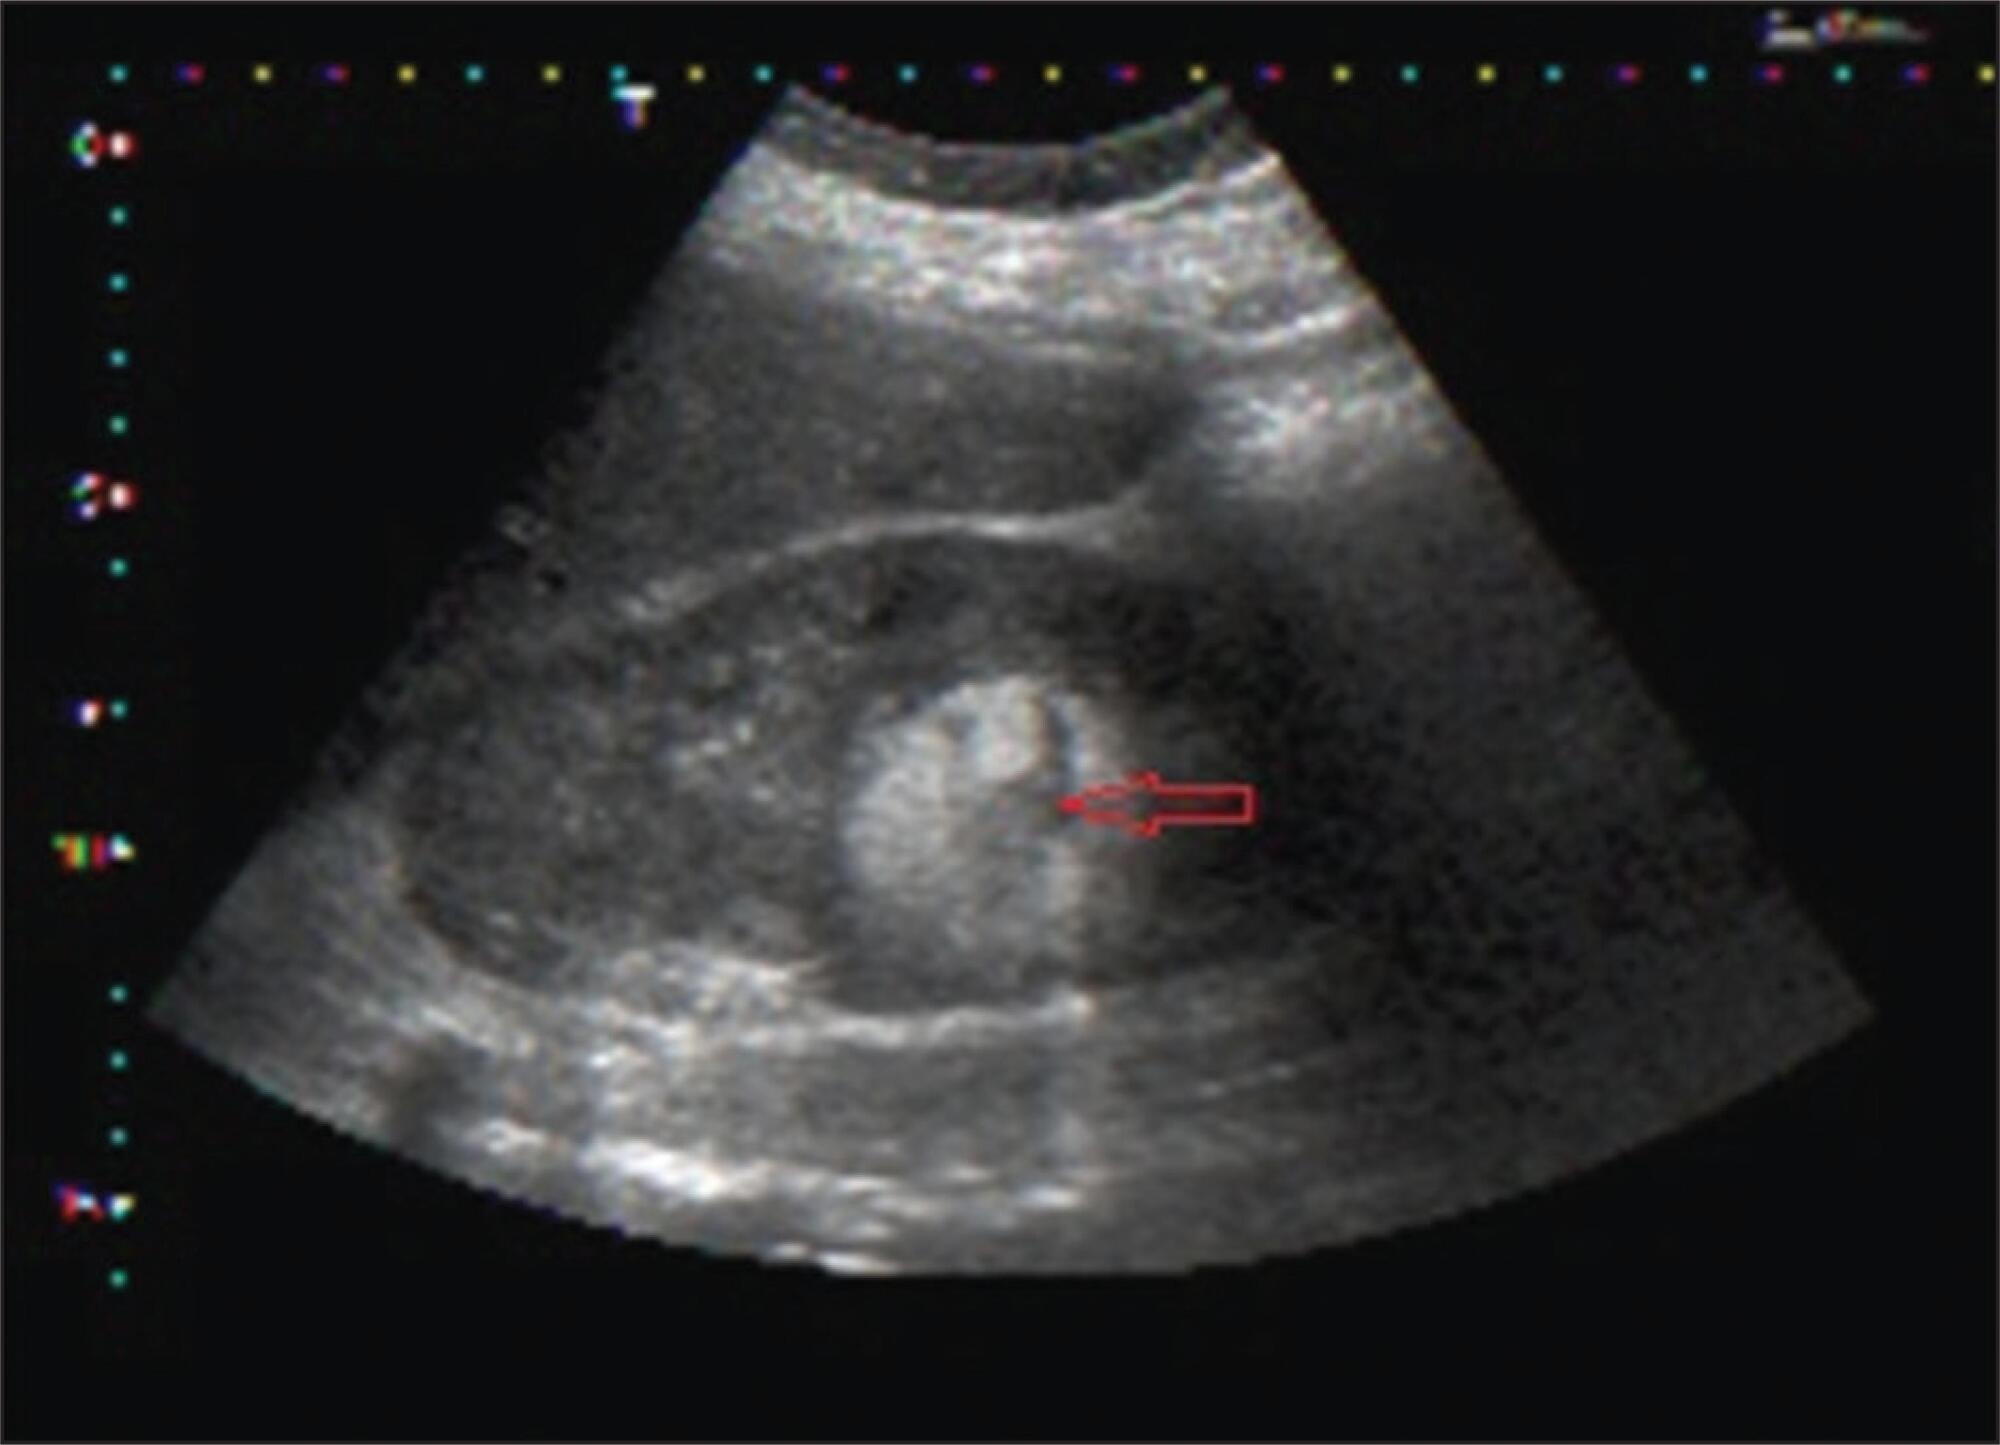 Spontaneous rupture of renal angiomyolipoma during pregnancy